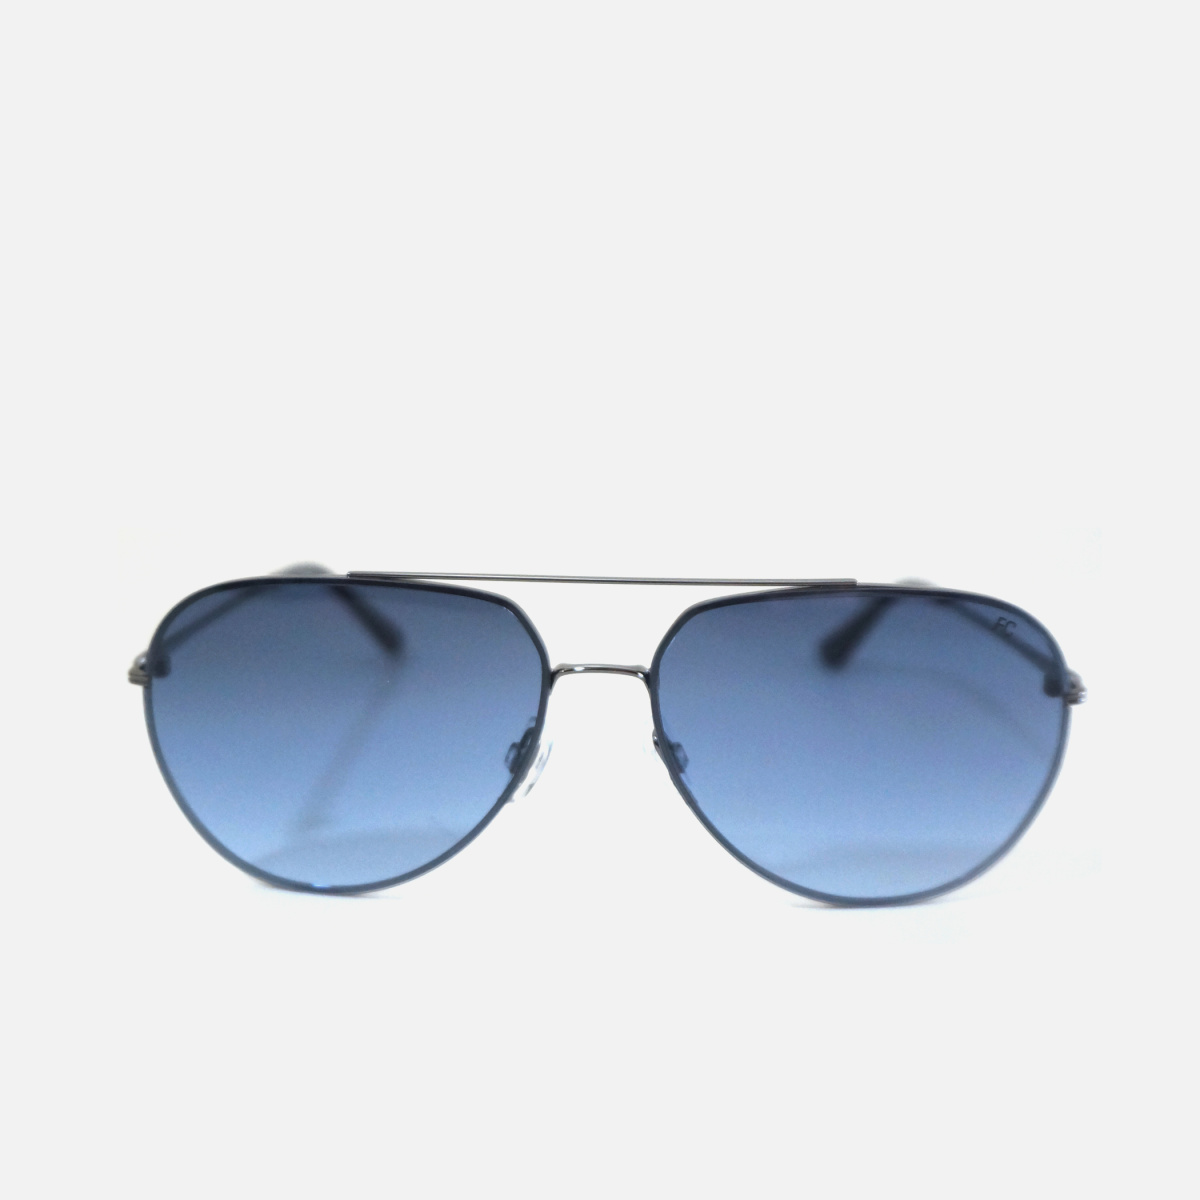 Details more than 126 mens white aviator sunglasses best